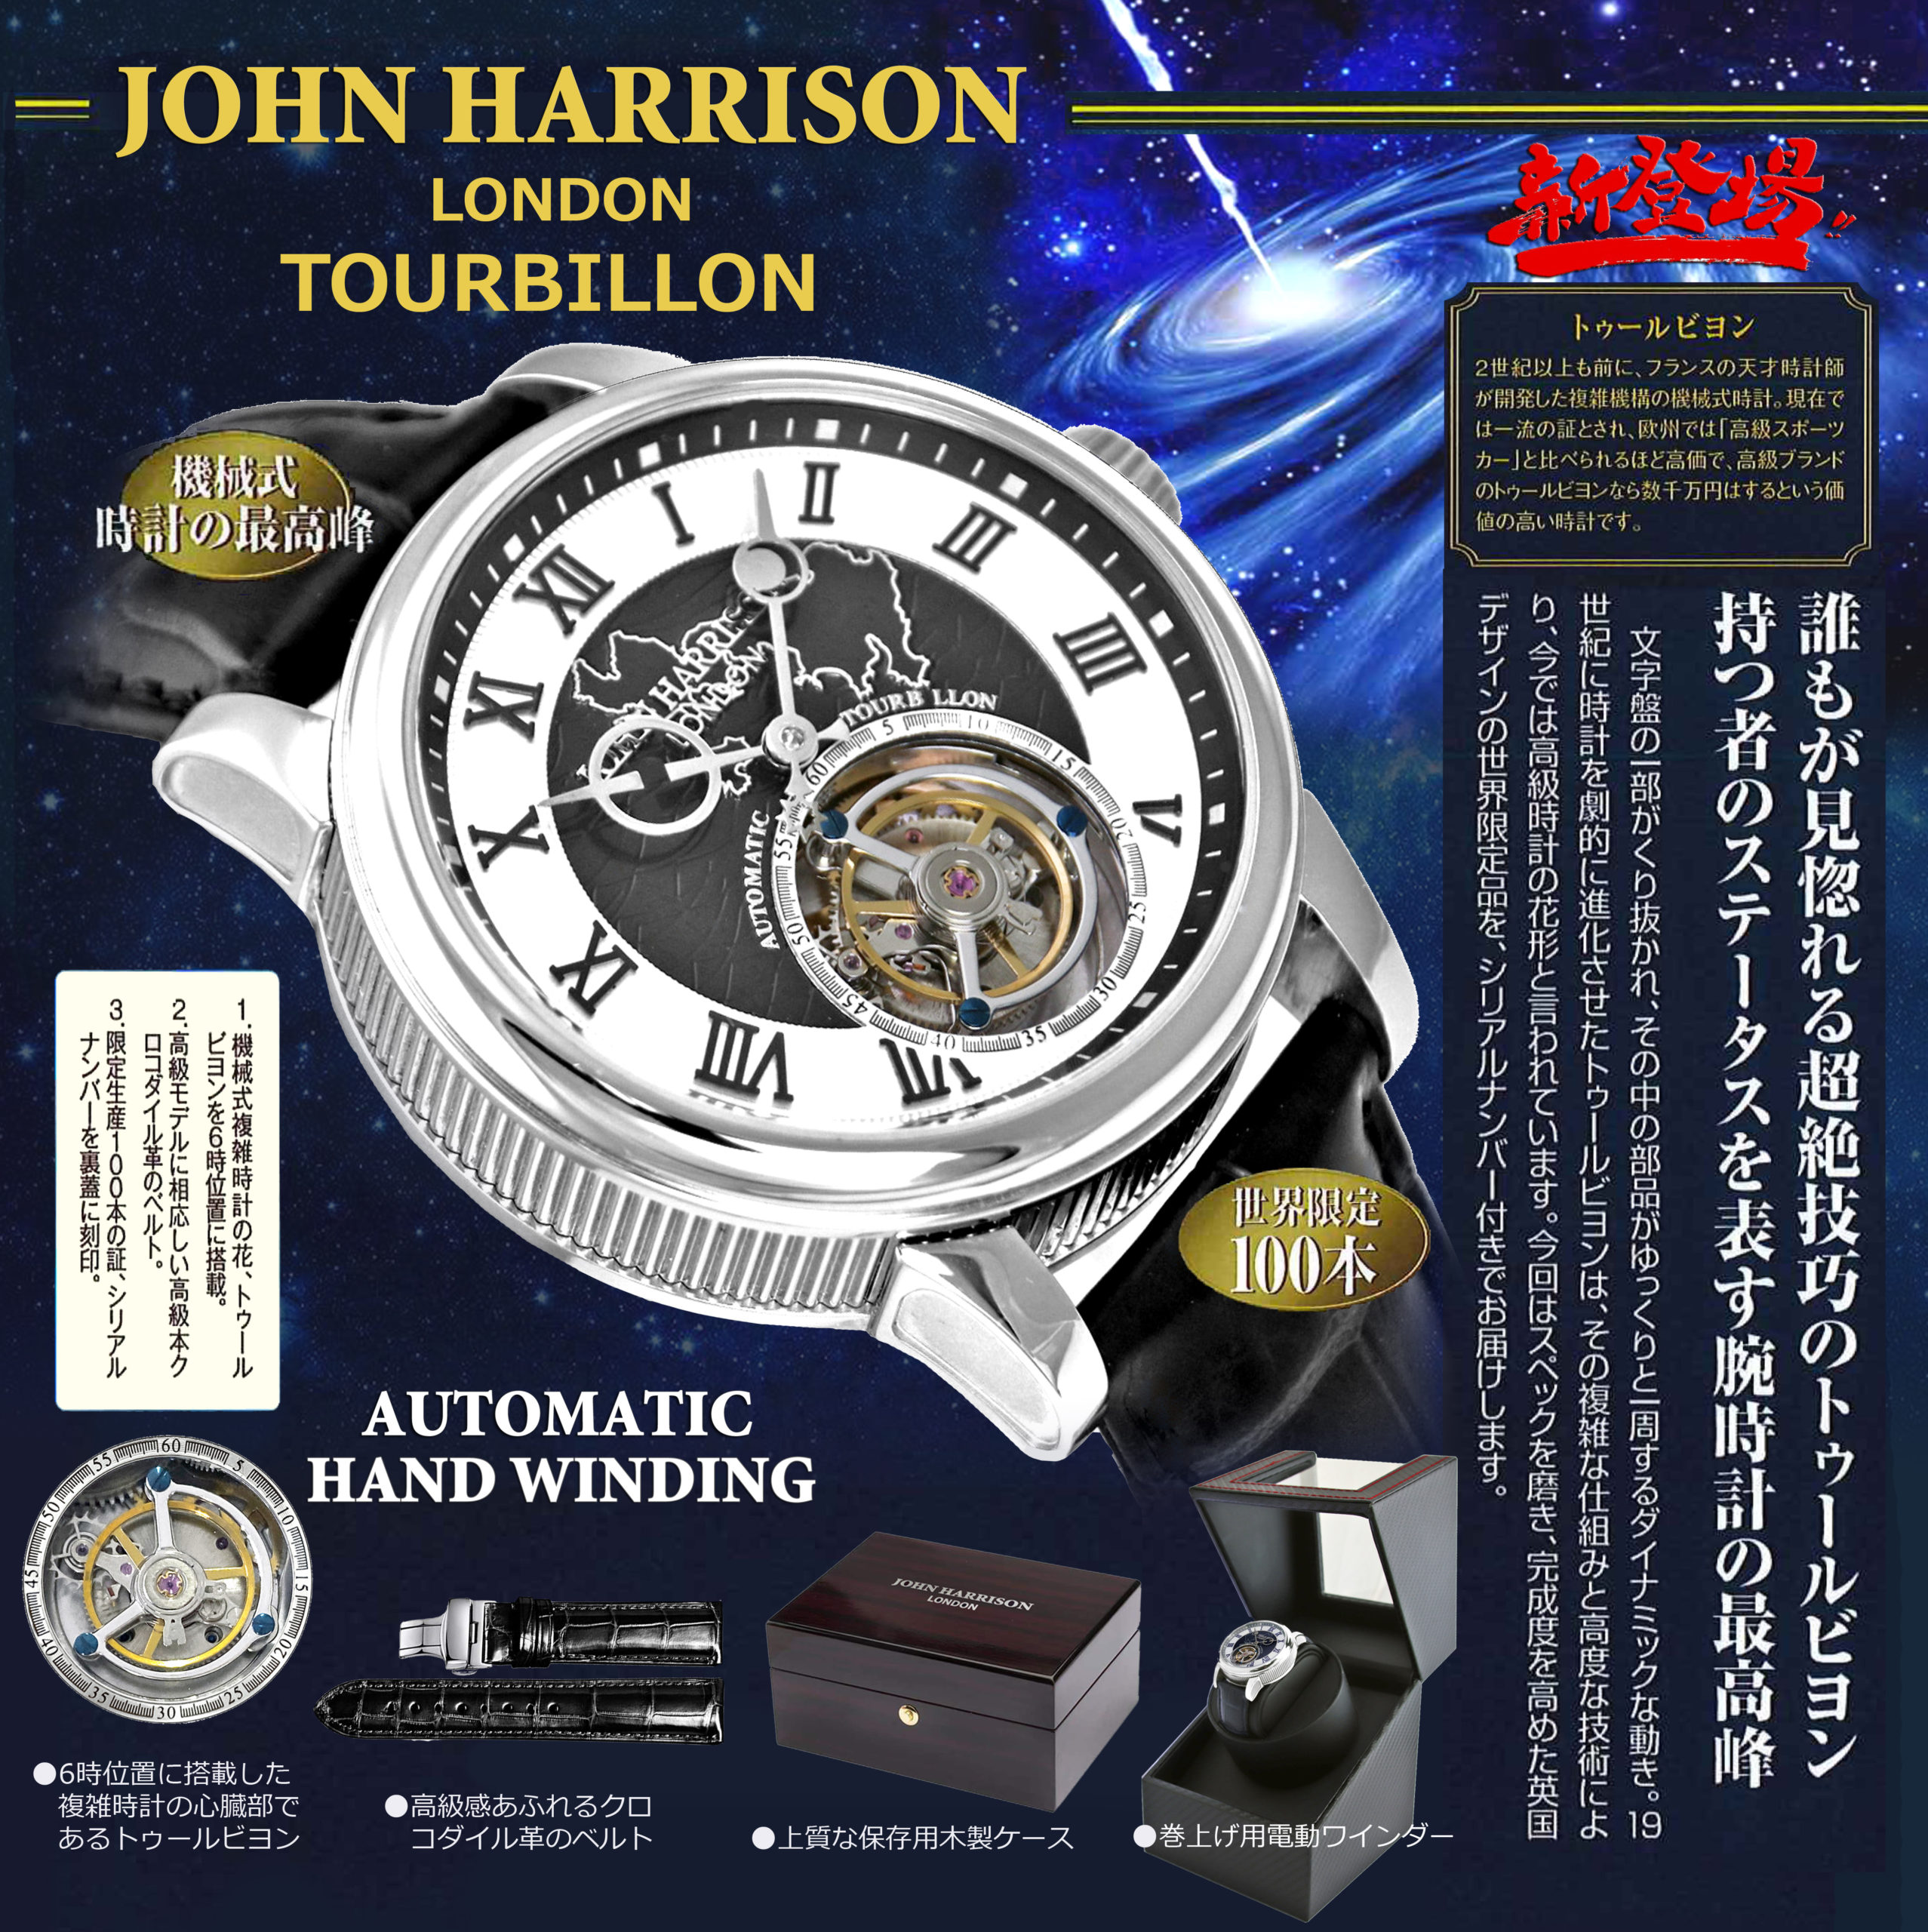 AUTOMATIC – 株式会社三島商事 J.HARRISON ジョン・ハリソン製品輸入販売